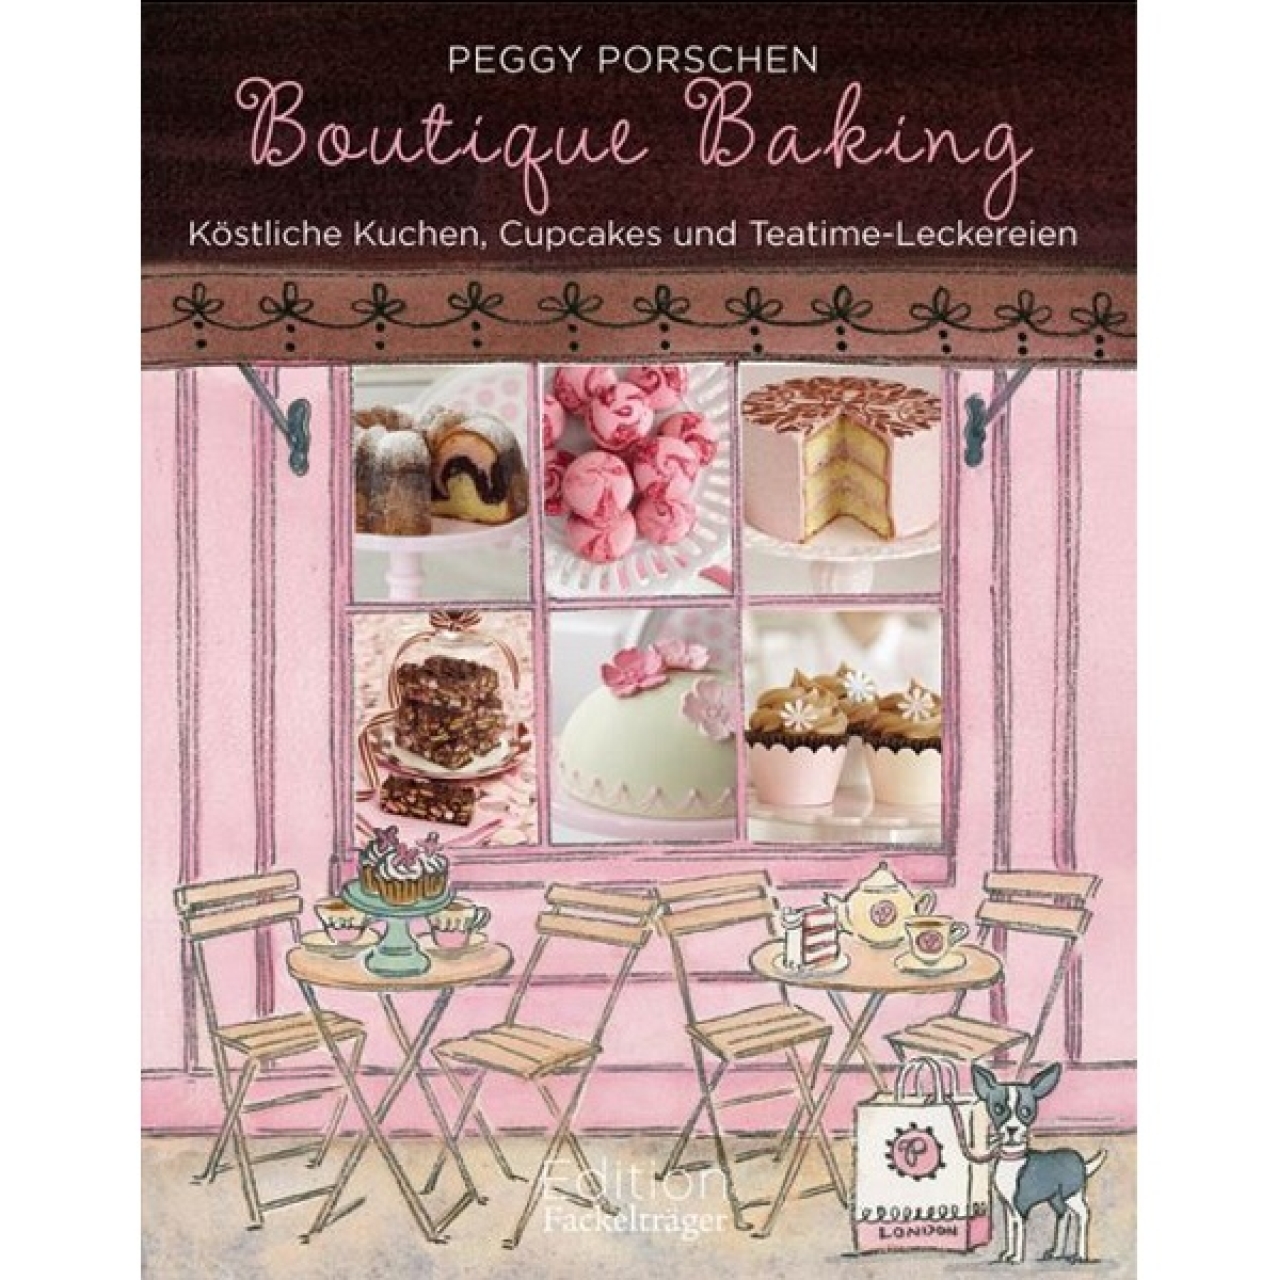 Backbuch Peggy Porschen 'Boutique Baking' | MEINCUPCAKE Shop